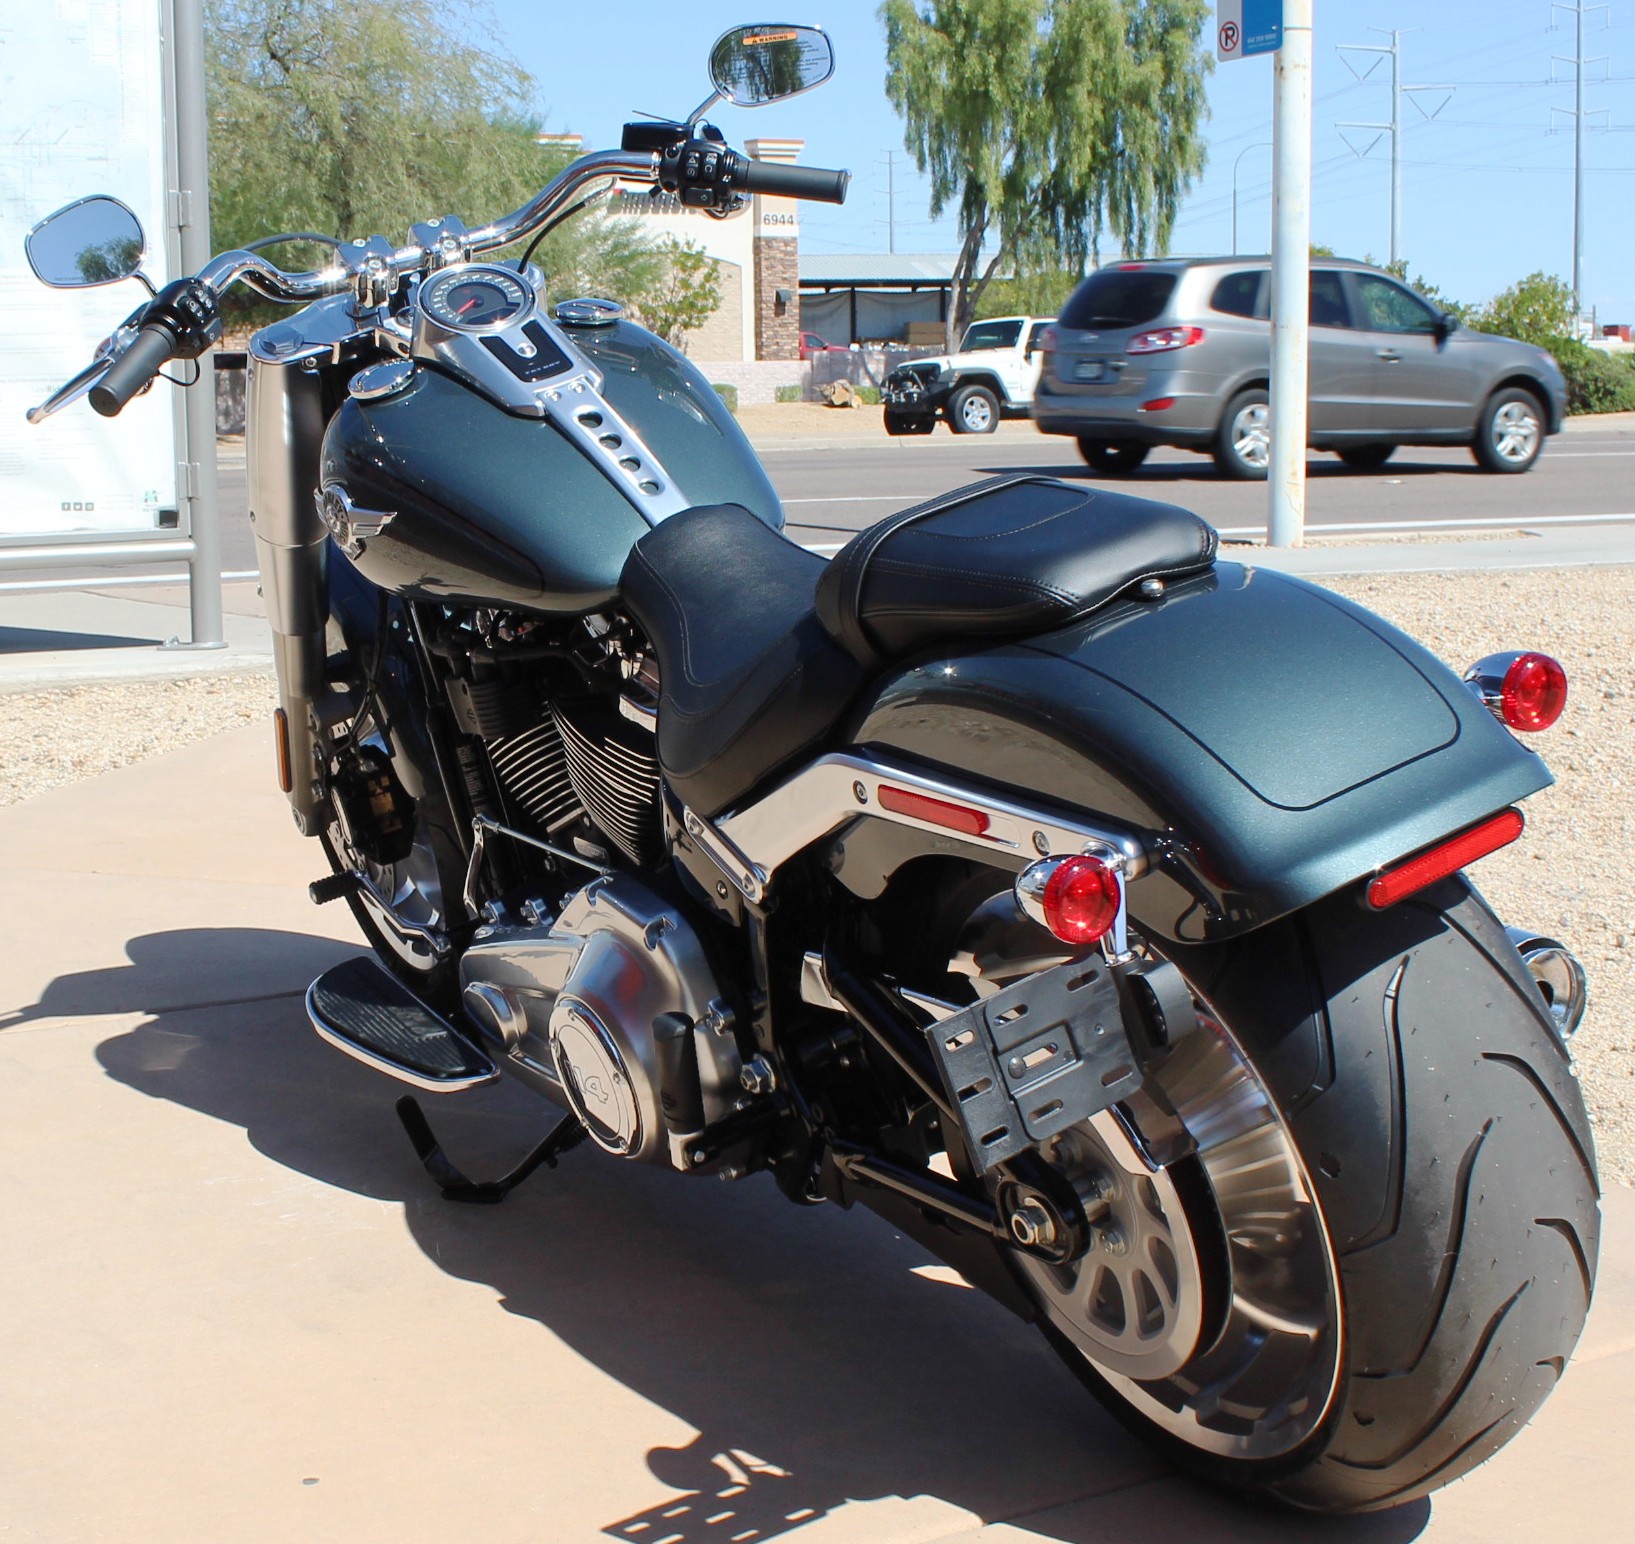 New 2020 Harley-Davidson Fat Boy 114 in Chandler #HD022371 | Chandler